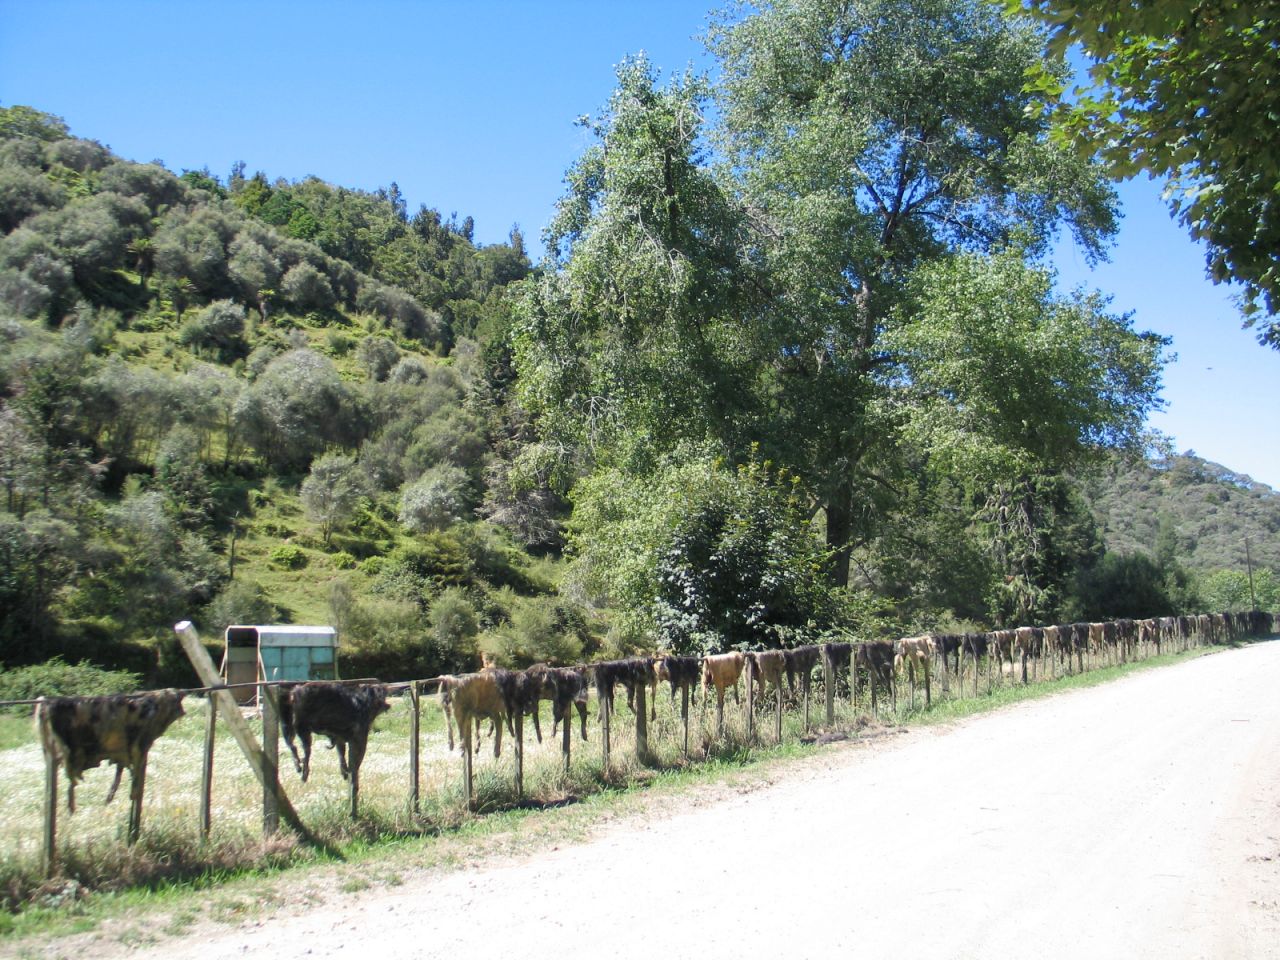 fotka / image plot prasecich kozesinek u Whangamomona, New Zealand